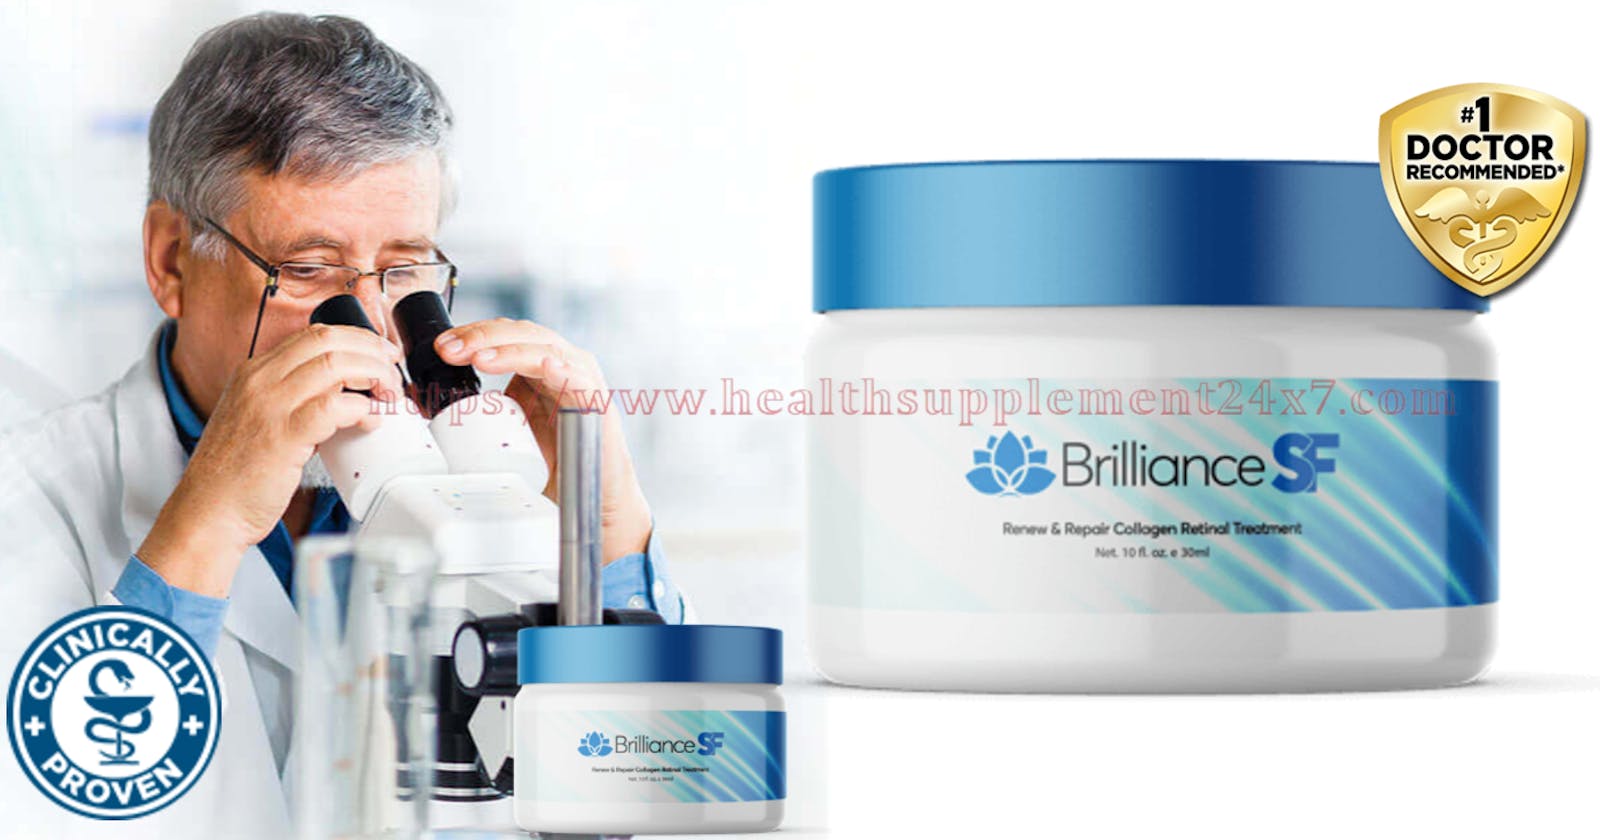 Brilliance Sf Cream (#1 Clinical Proven Skin Care Formula) FDA Approved Or Hoax?